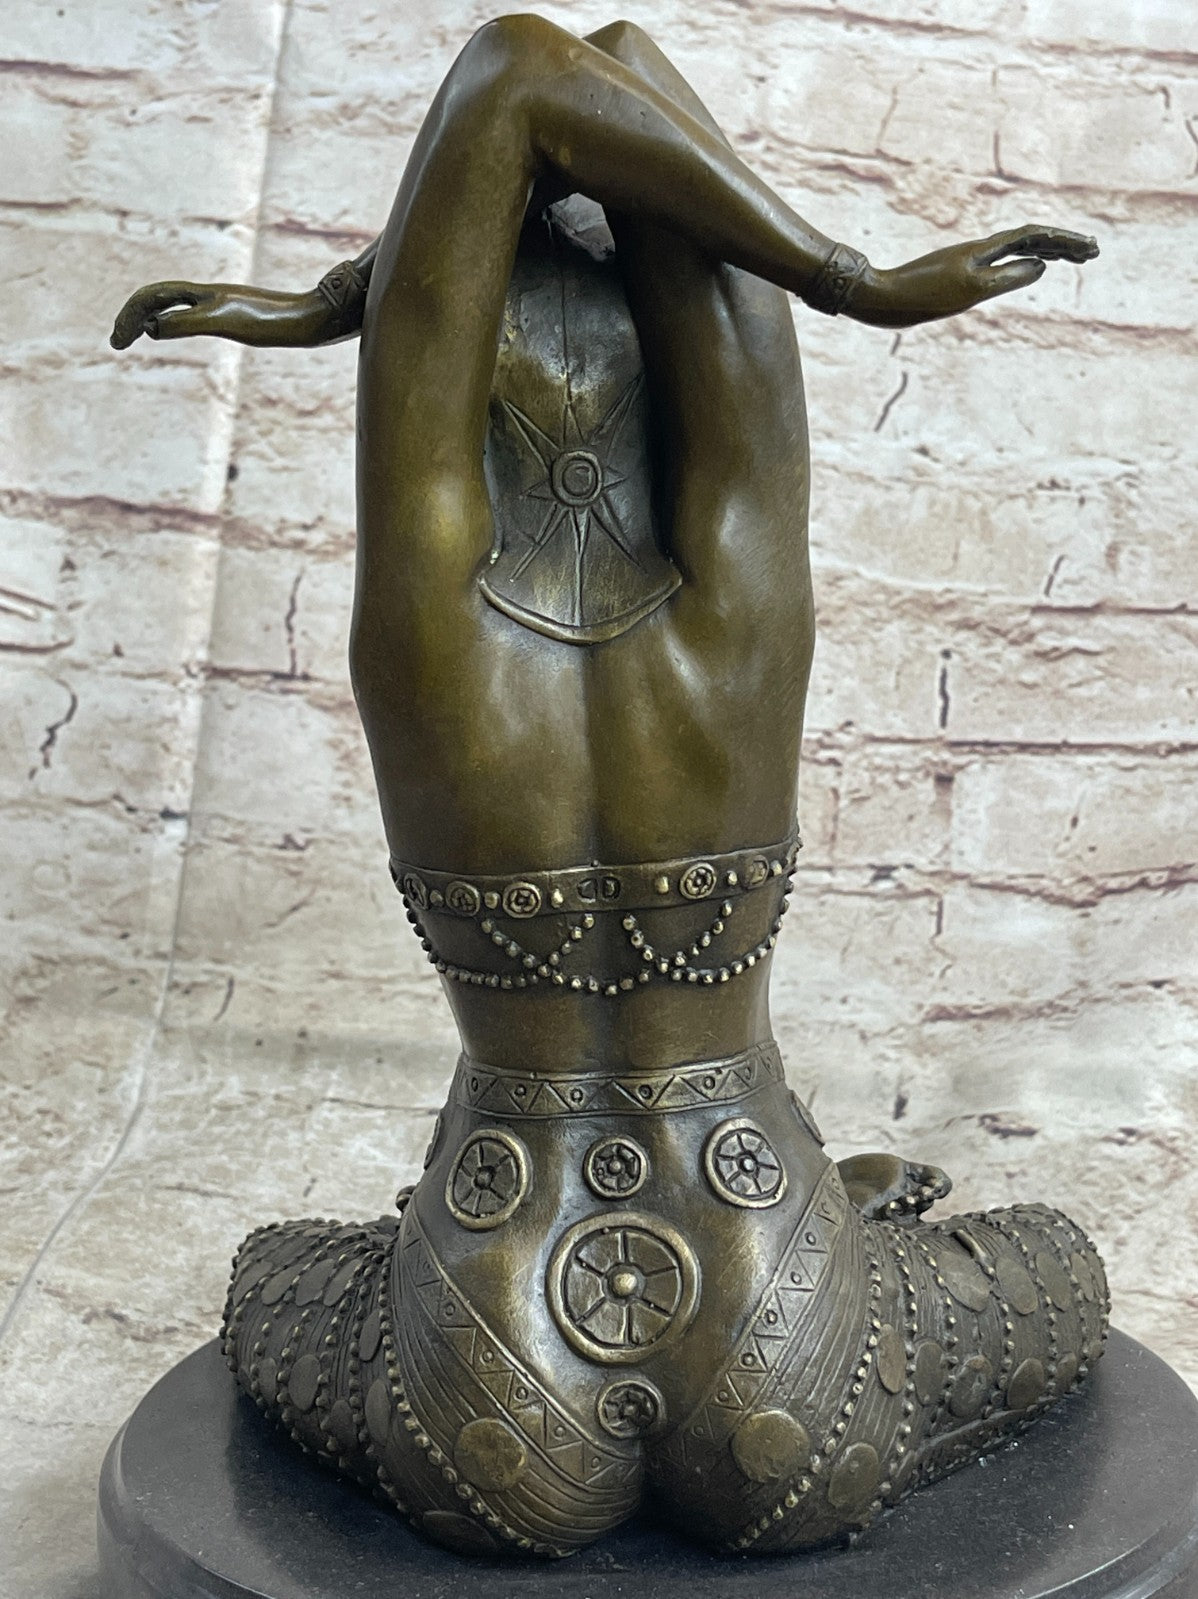 Handcrafted bronze sculpture SALE Art Meditation Yoga Lady Lost Wax Method